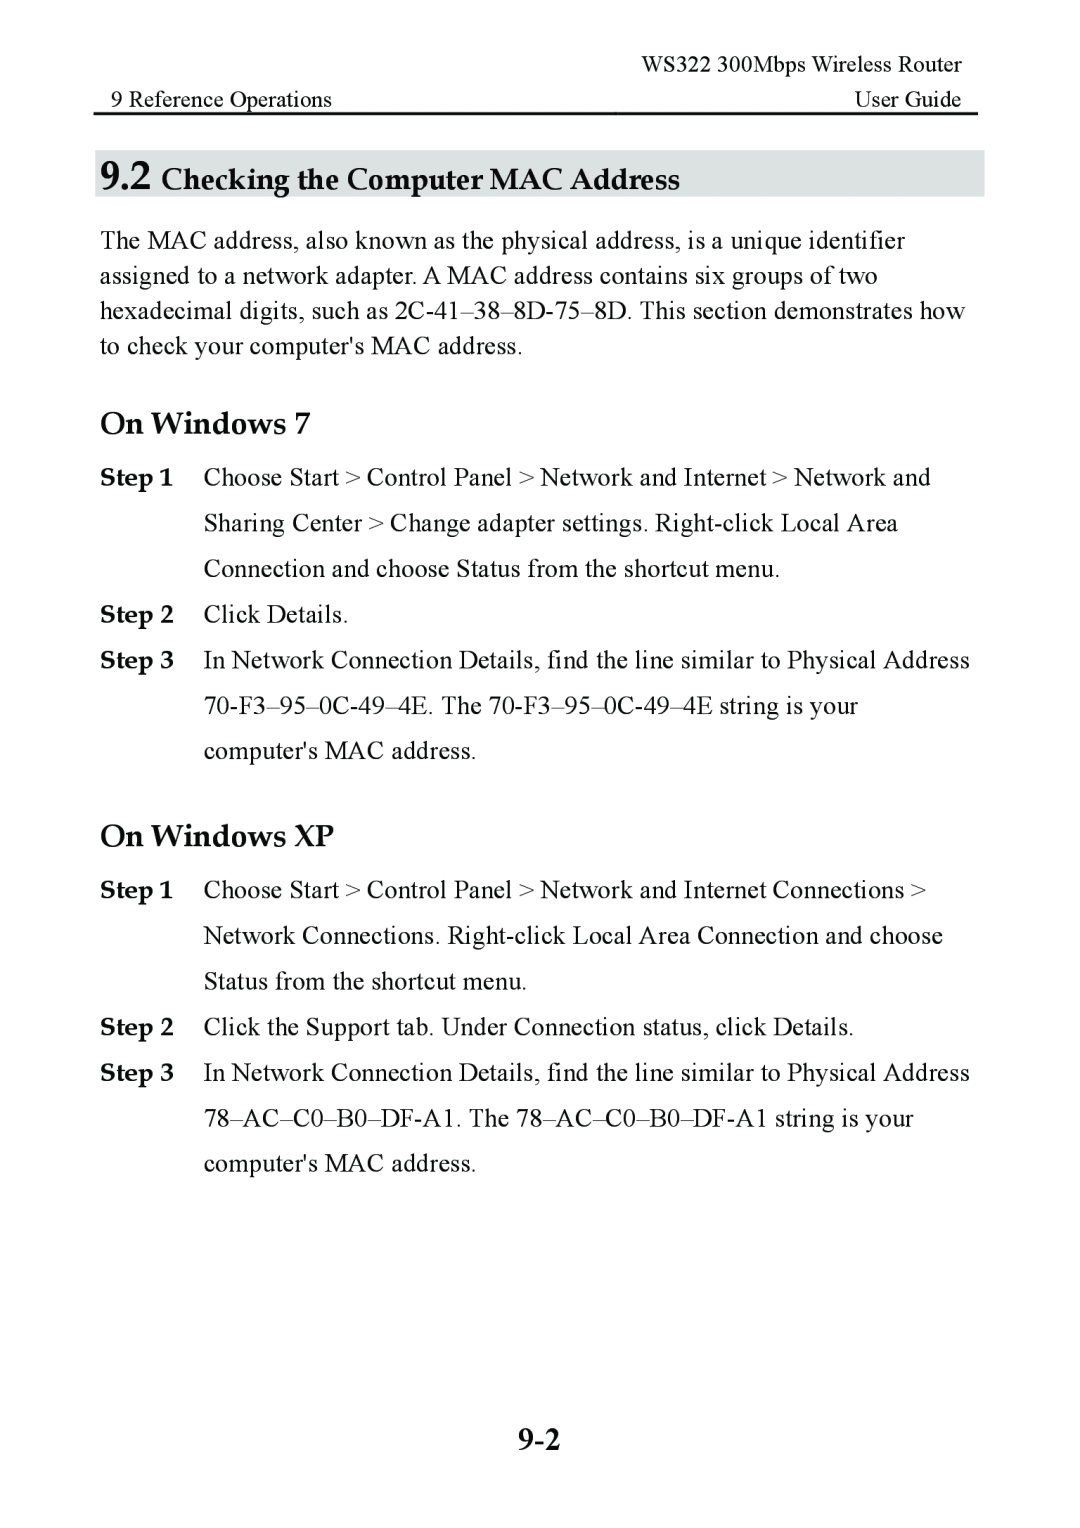 Huawei WS322 manual On Windows XP, Checking the Computer MAC Address 